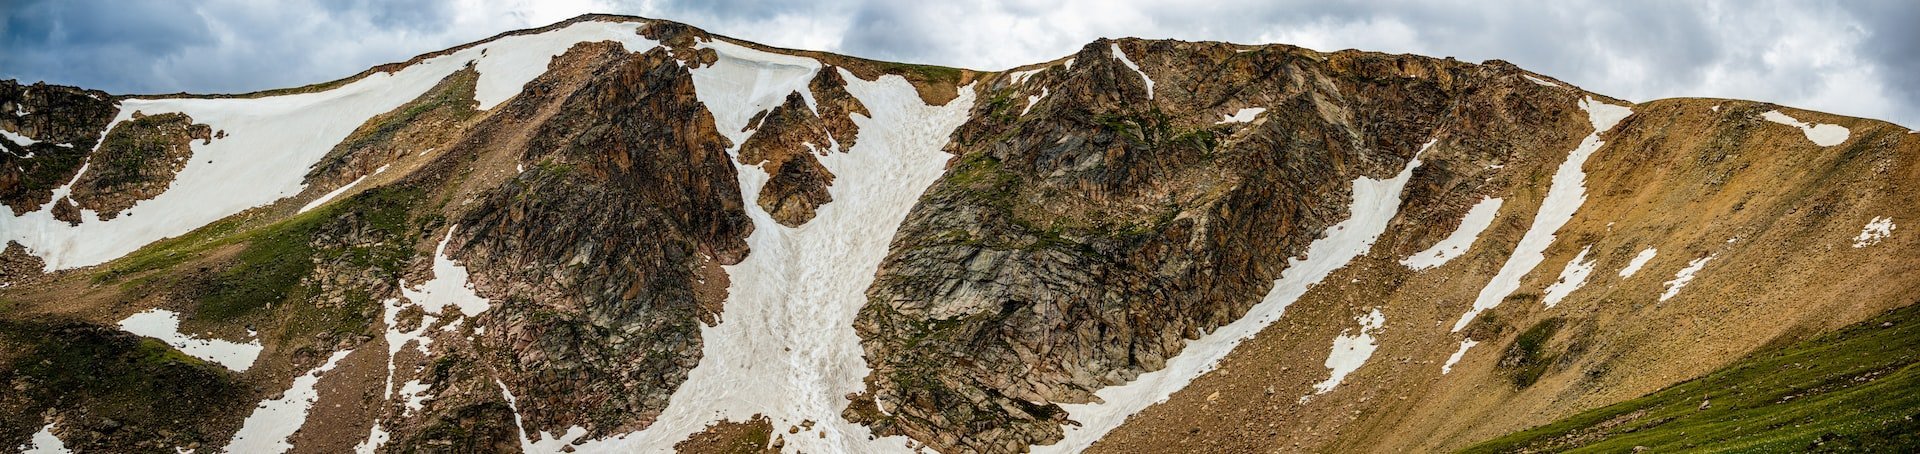 Biking the Beartooth Pass in Montana & Wyoming - Godspeed Socks